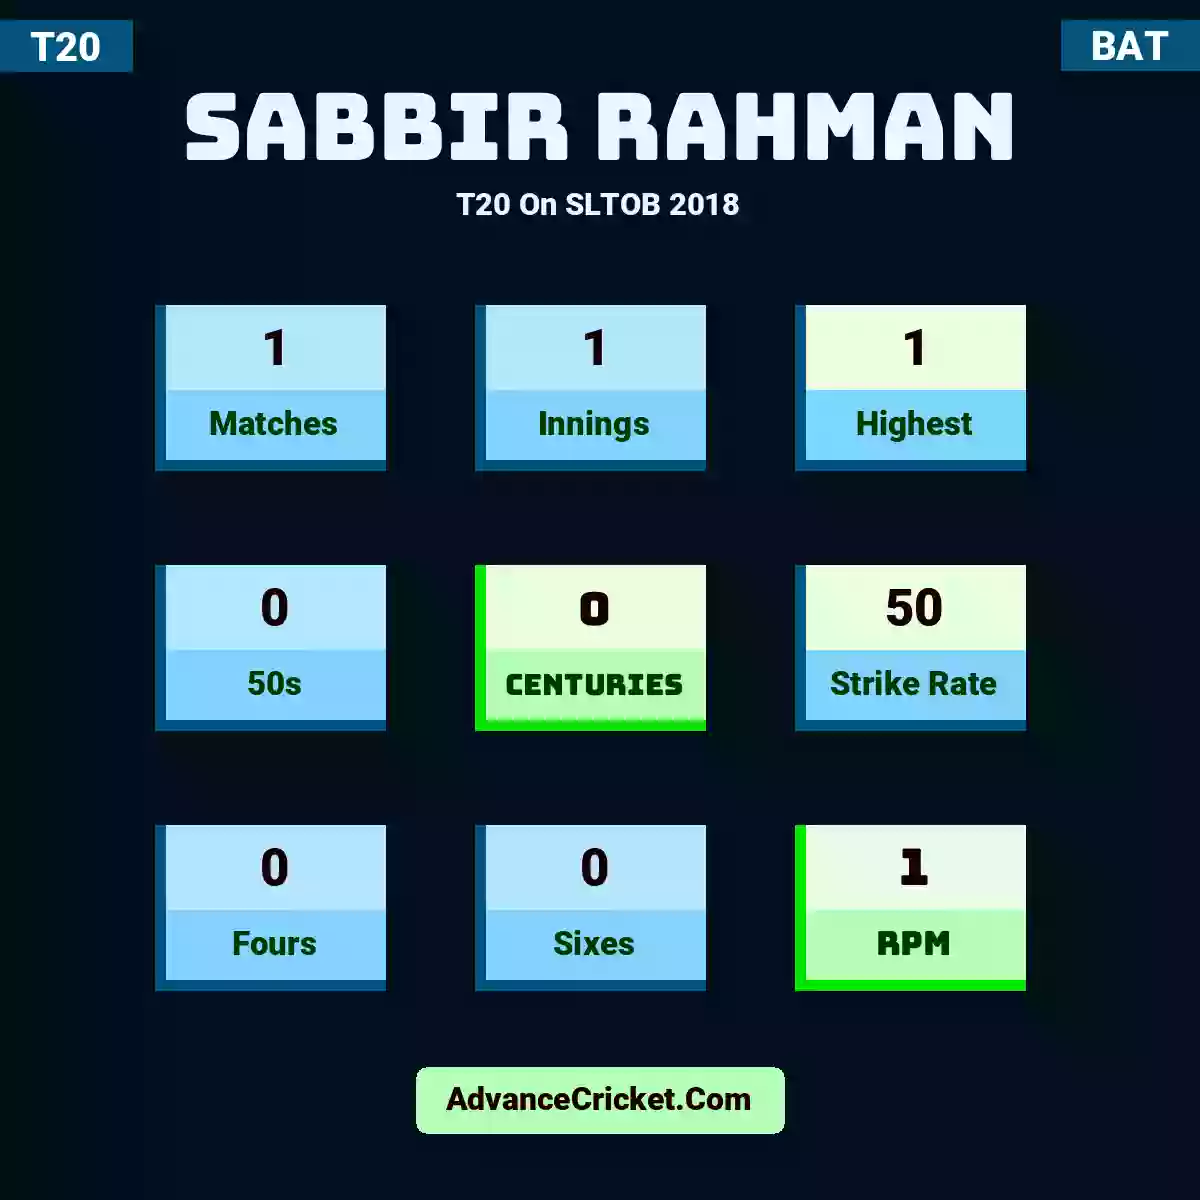 Sabbir Rahman T20  On SLTOB 2018, Sabbir Rahman played 1 matches, scored 1 runs as highest, 0 half-centuries, and 0 centuries, with a strike rate of 50. S.Rahman hit 0 fours and 0 sixes, with an RPM of 1.